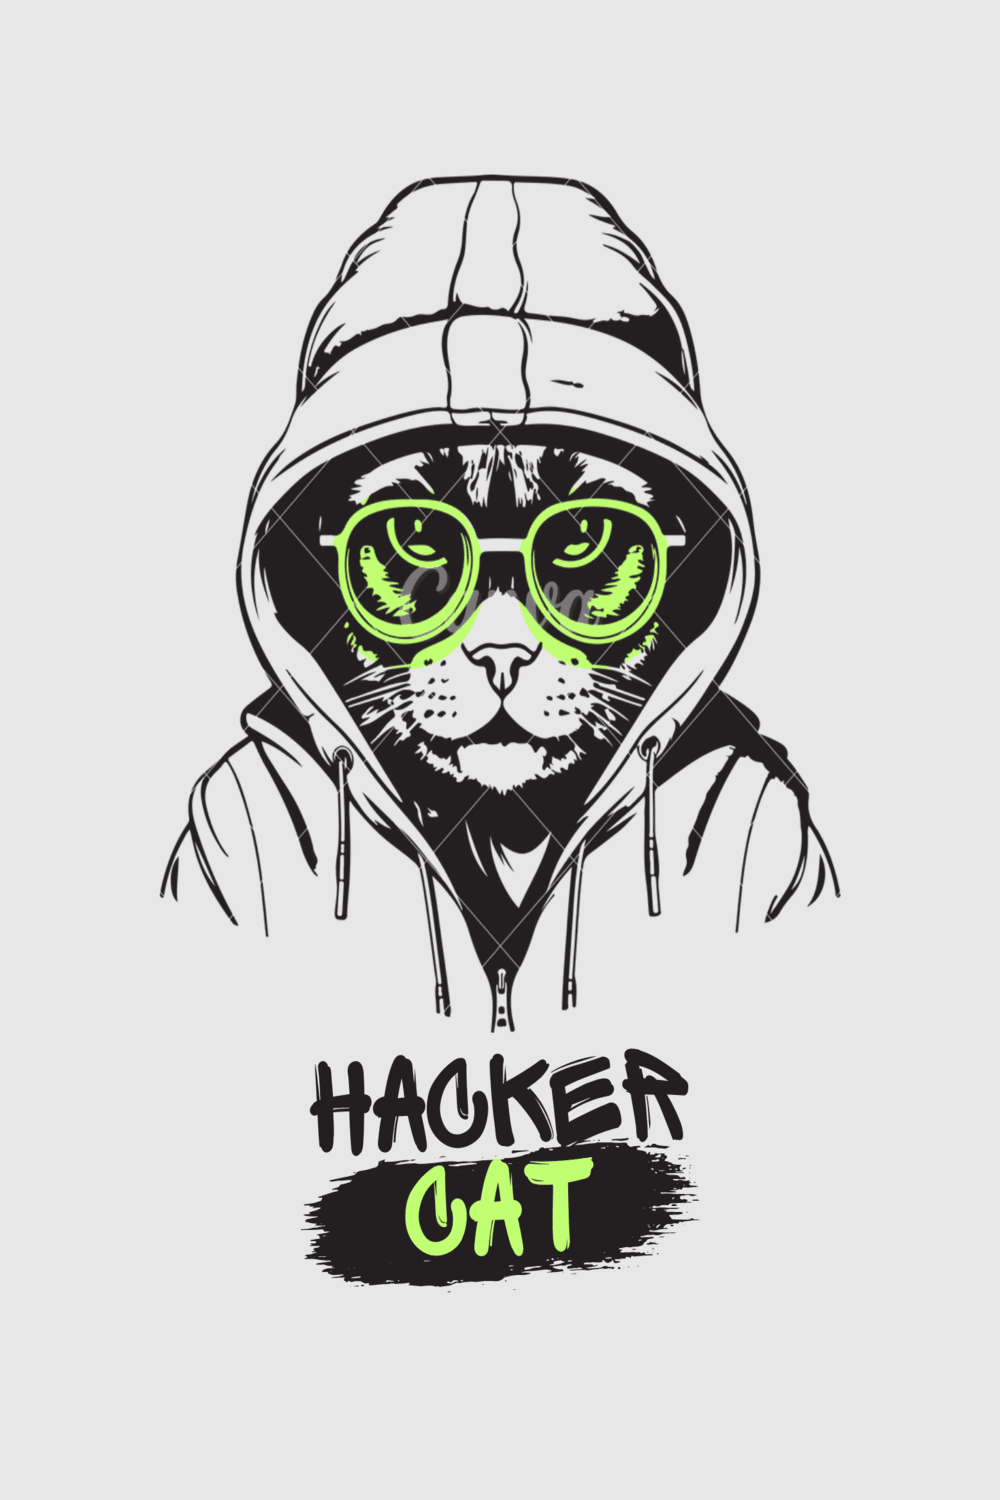 Hacker Cat T-shirt design pinterest preview image.